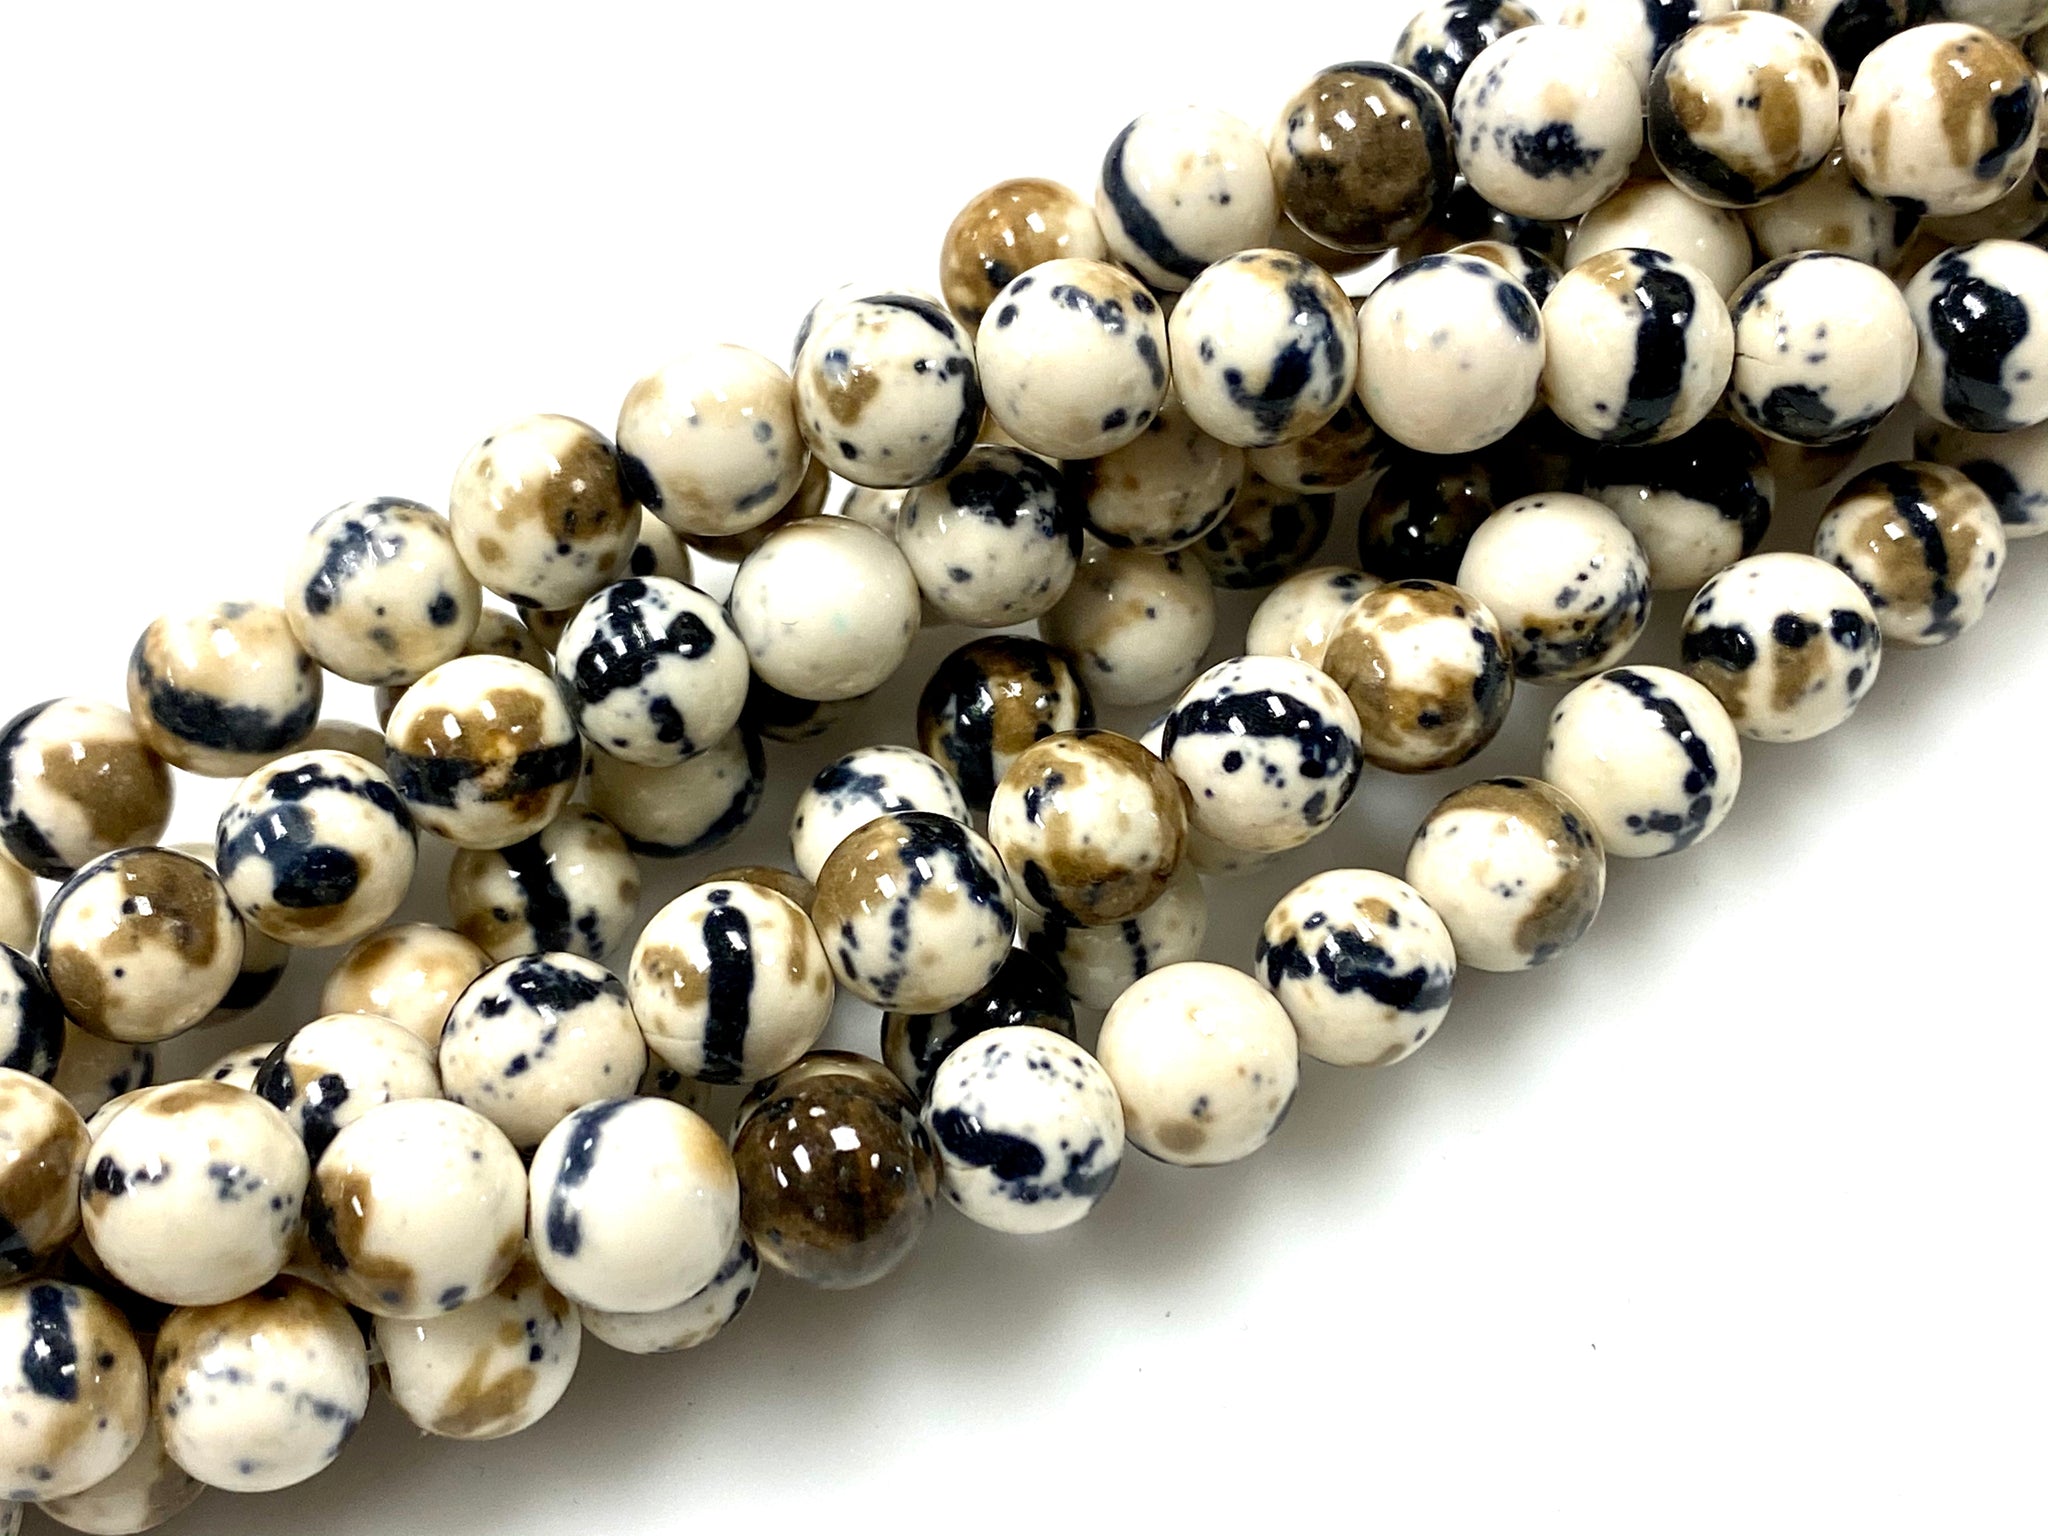 Natural Beige Rain Jasper Beads / Faceted Round Shape Beads / Healing Energy Stone Beads / 8mm 2 Strand Gemstone Beads